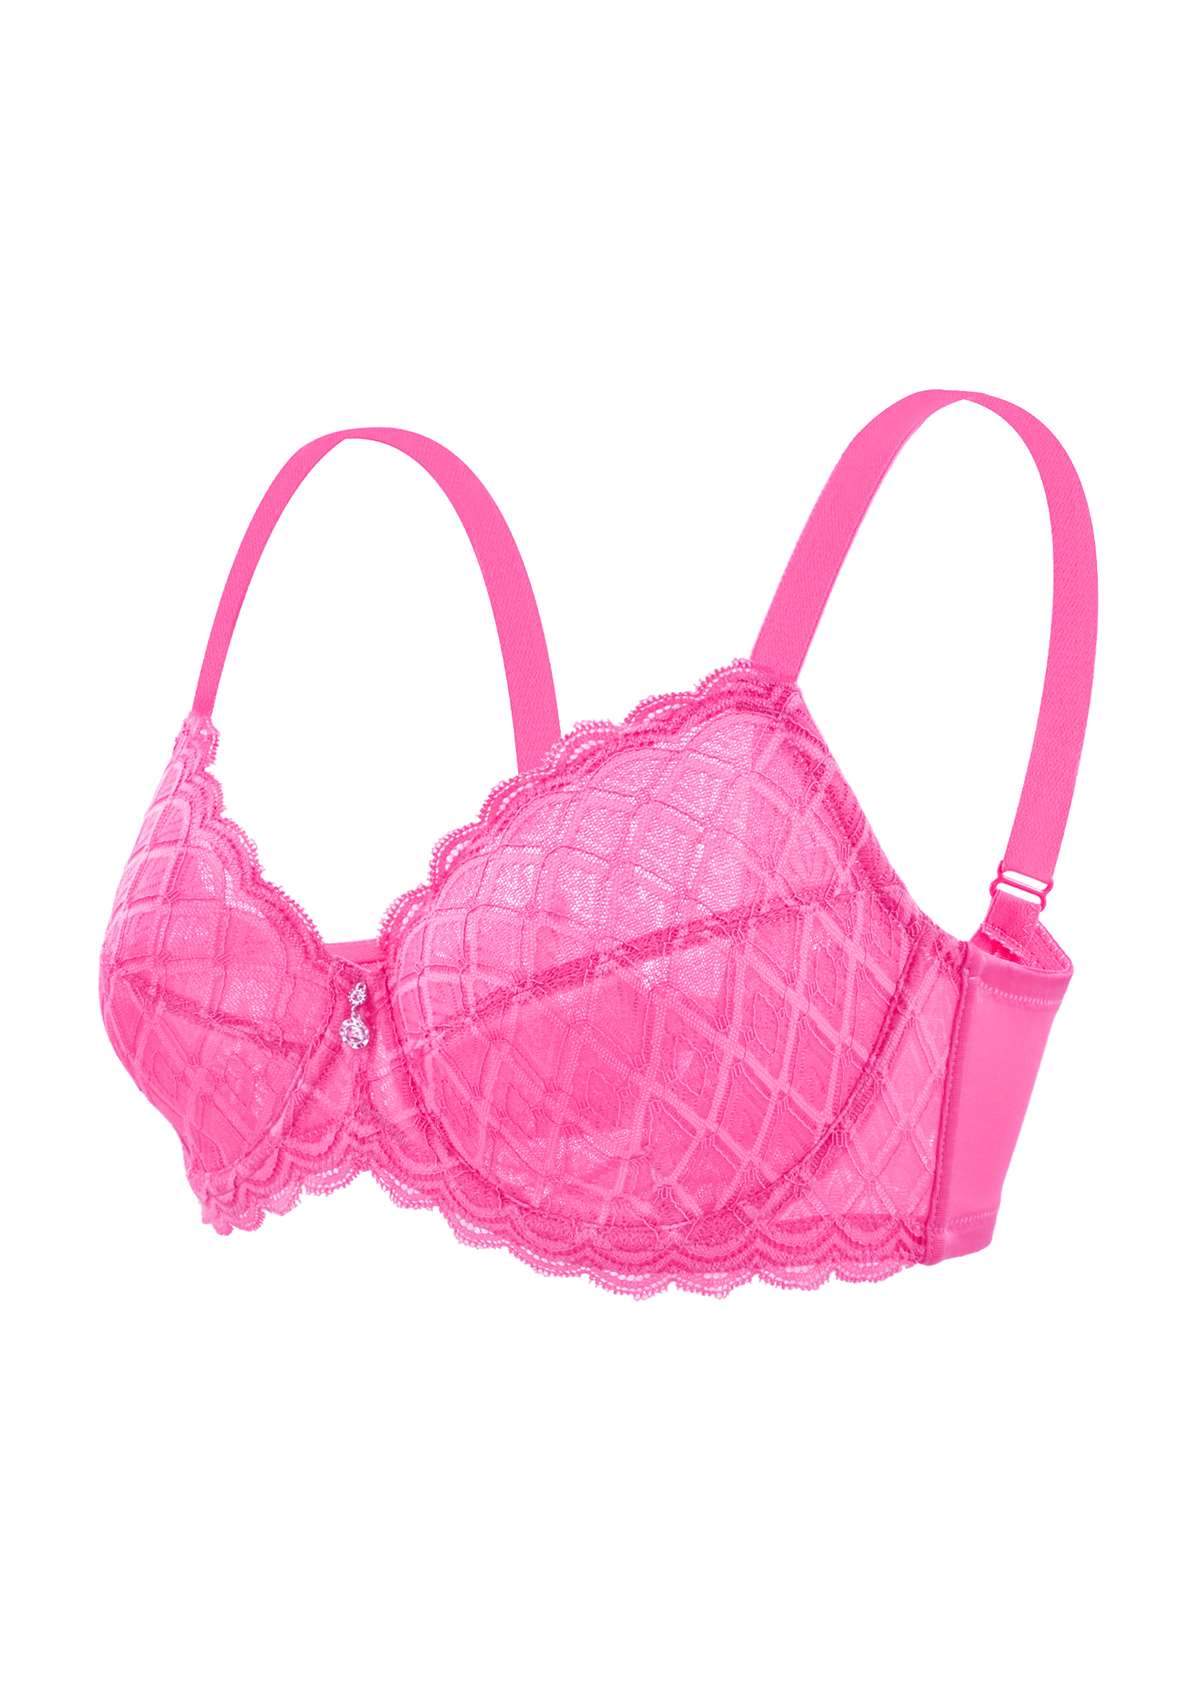 HSIA Plaid Lace Up Bra: Unlined Underwire Bra - Back Fat Hiding Bra - Hot Pink / 36 / C